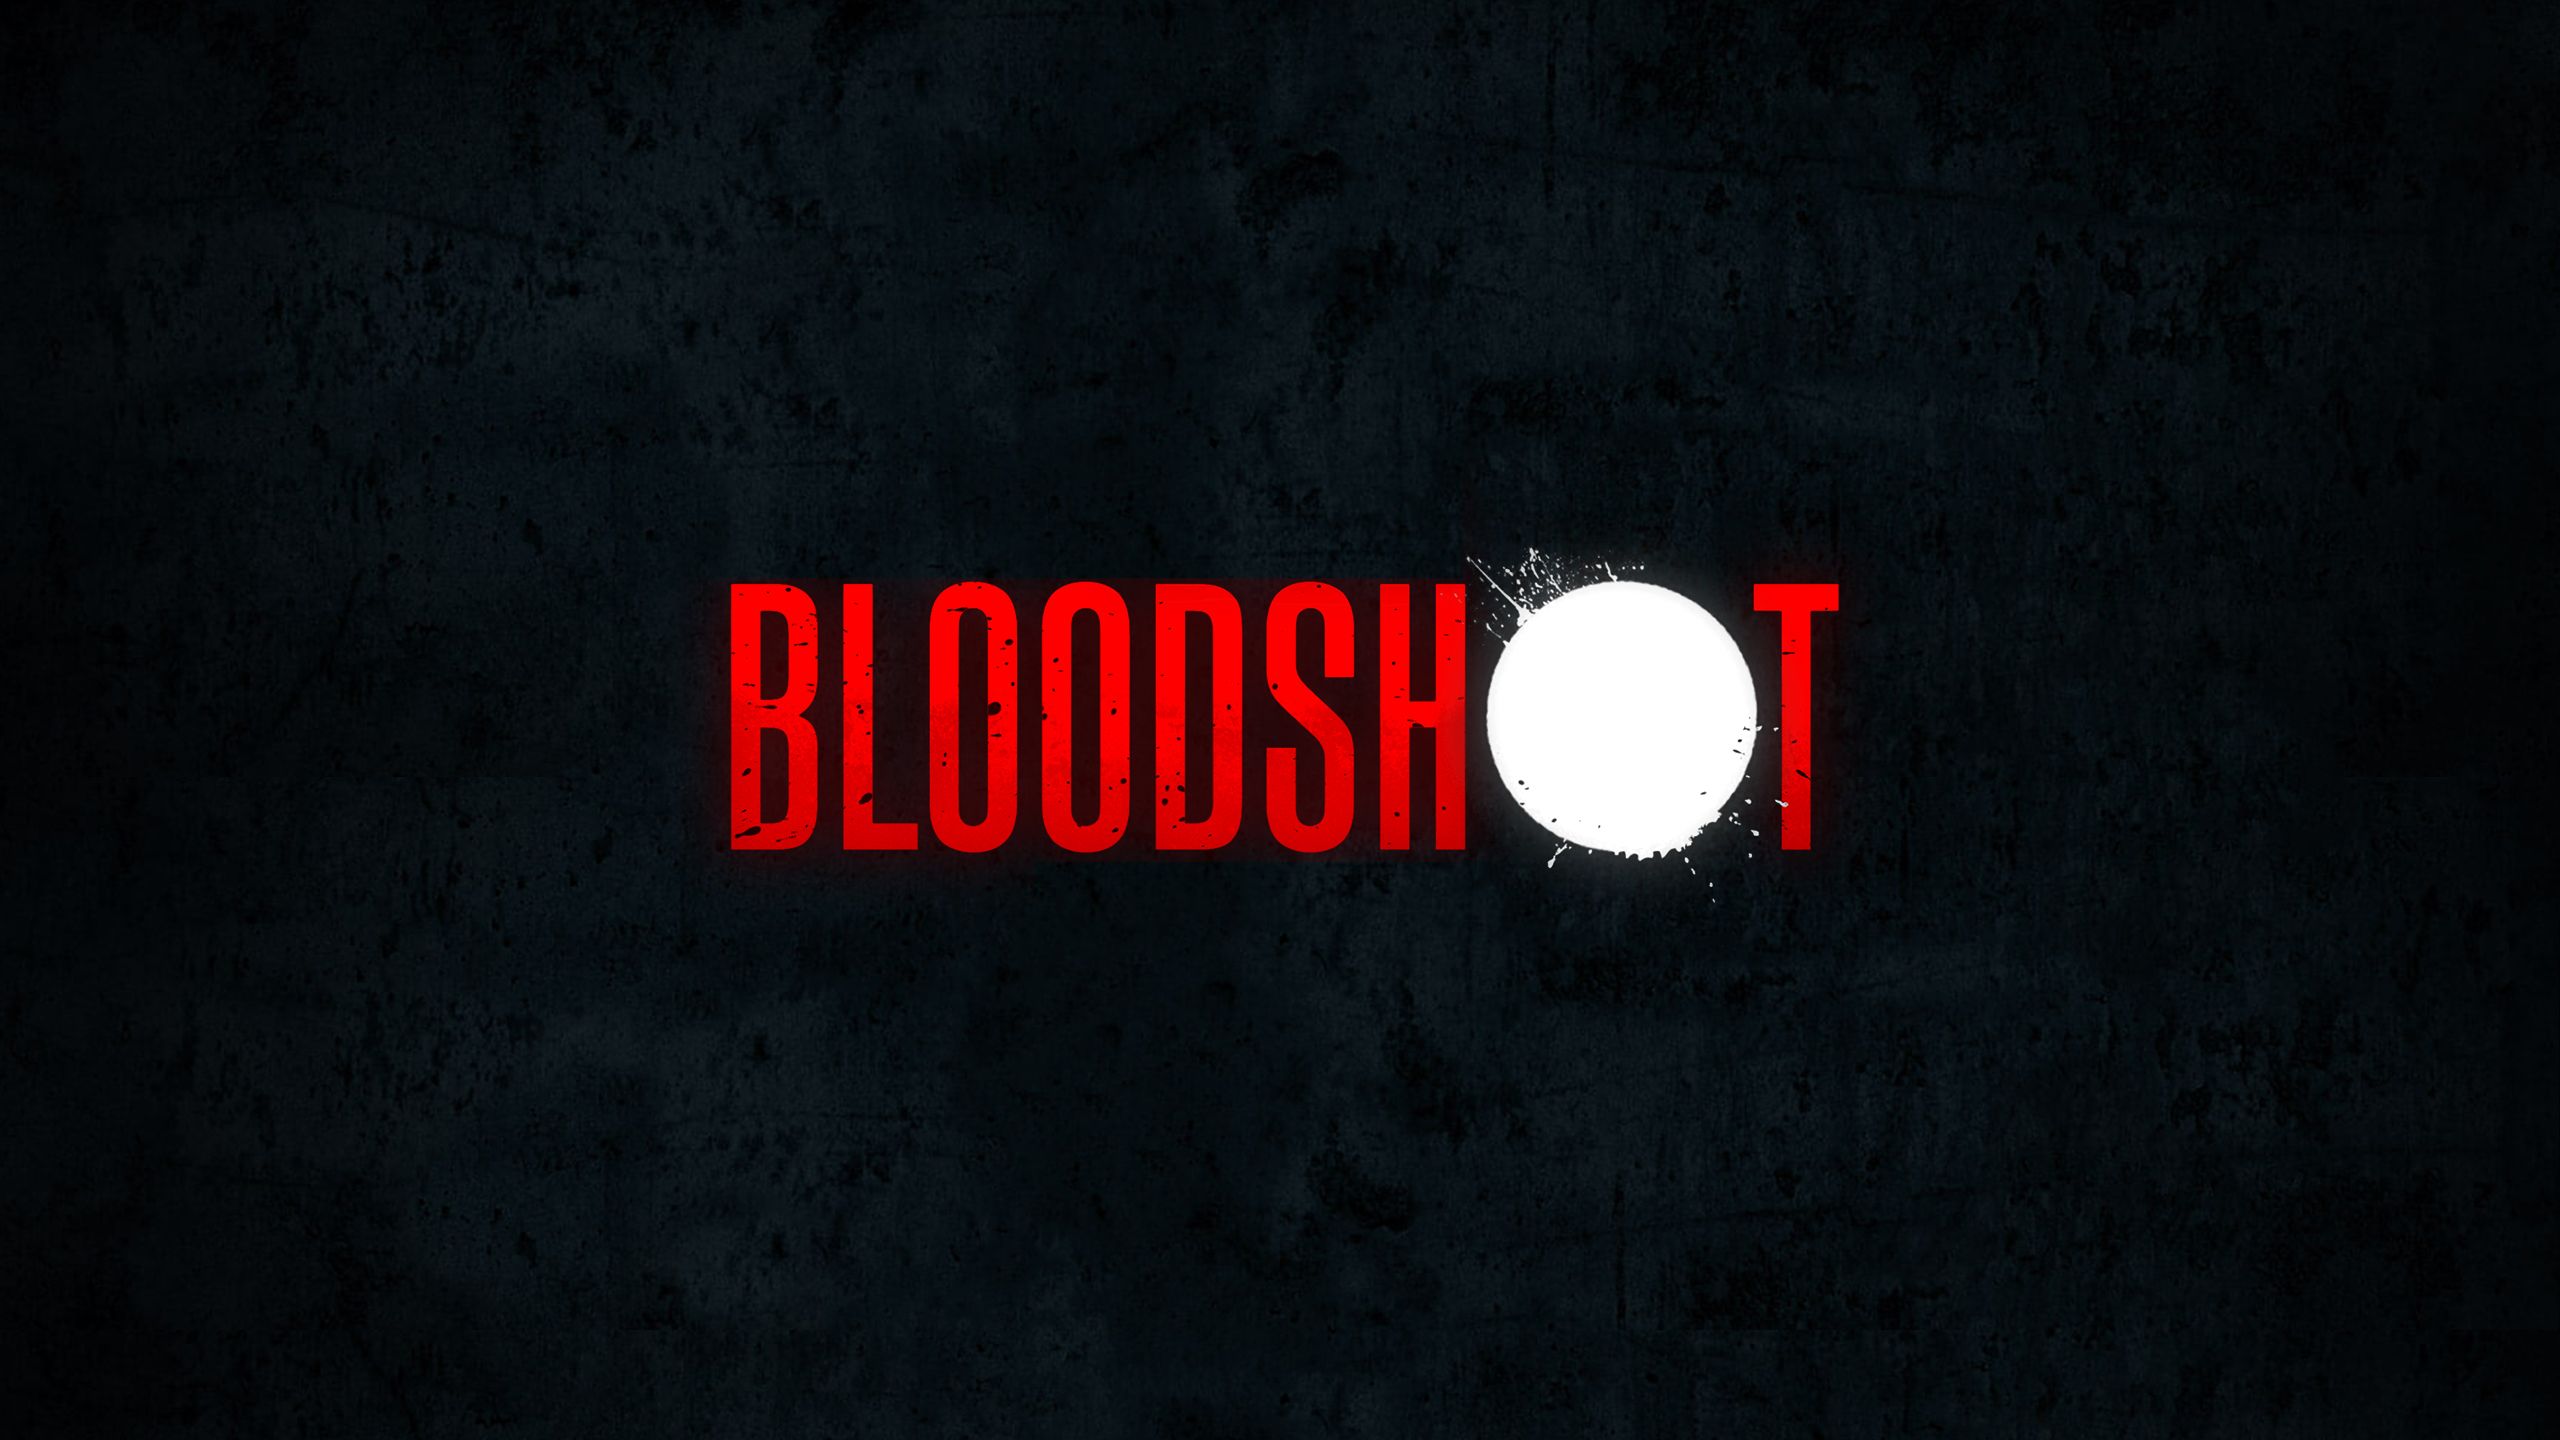 Bloodshot Movie Logo 1440P Resolution Wallpaper, HD Movies 4K Wallpaper, Image, Photo and Background